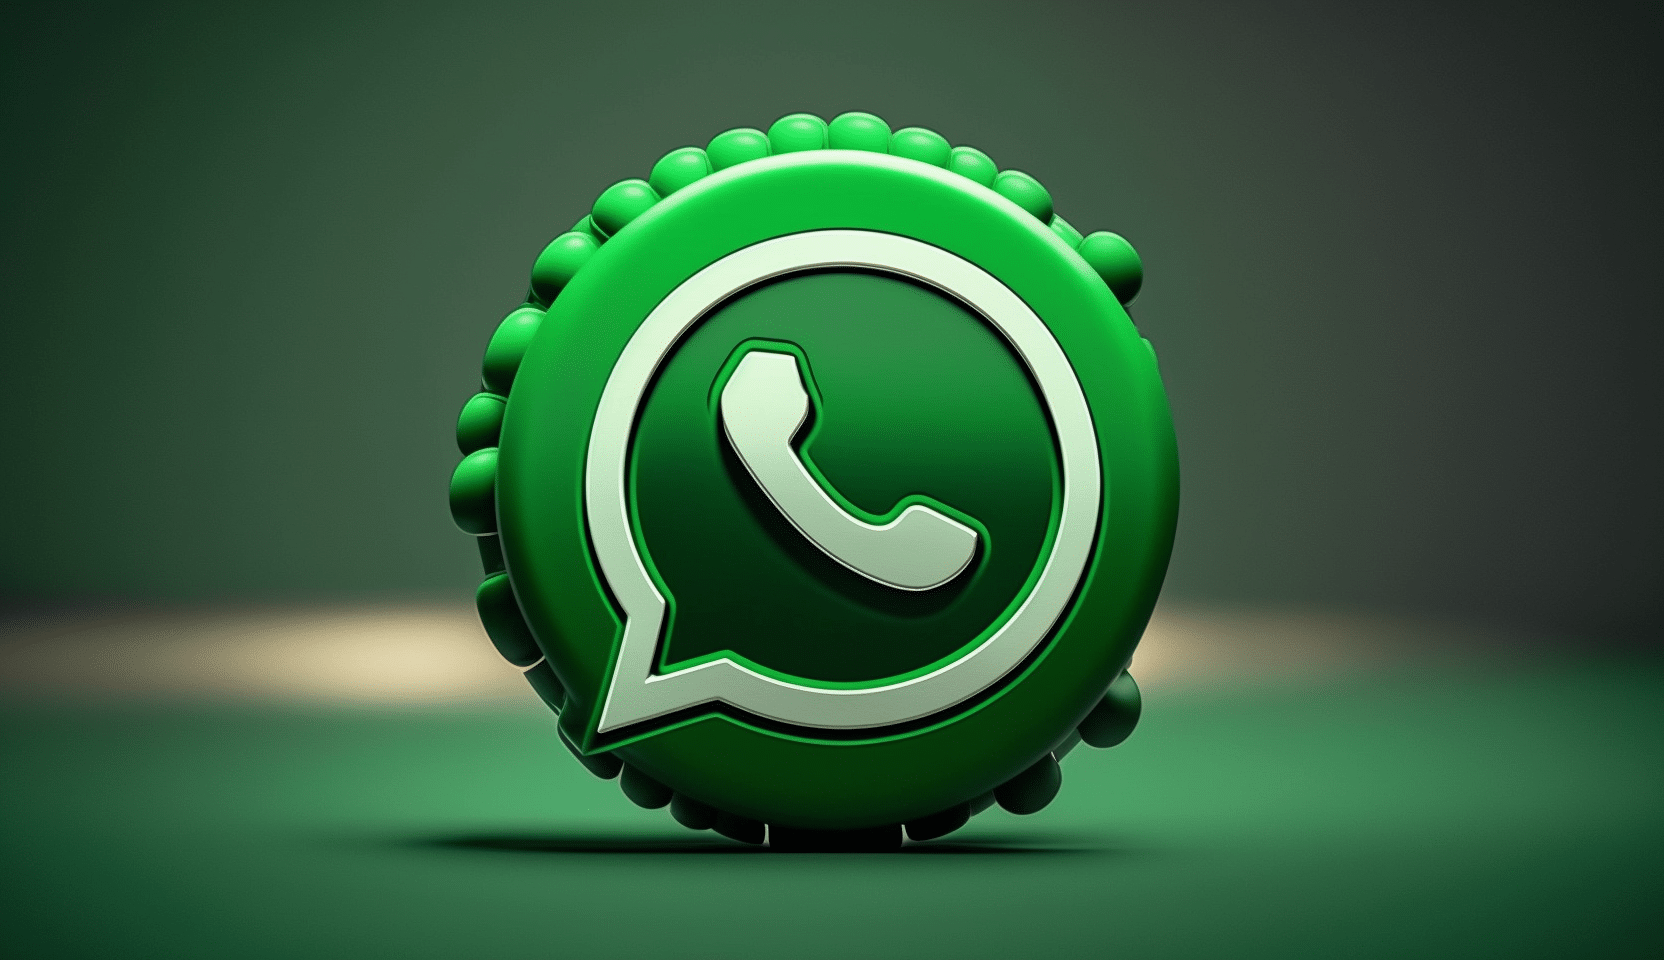 Representative image of a WhatsApp logo